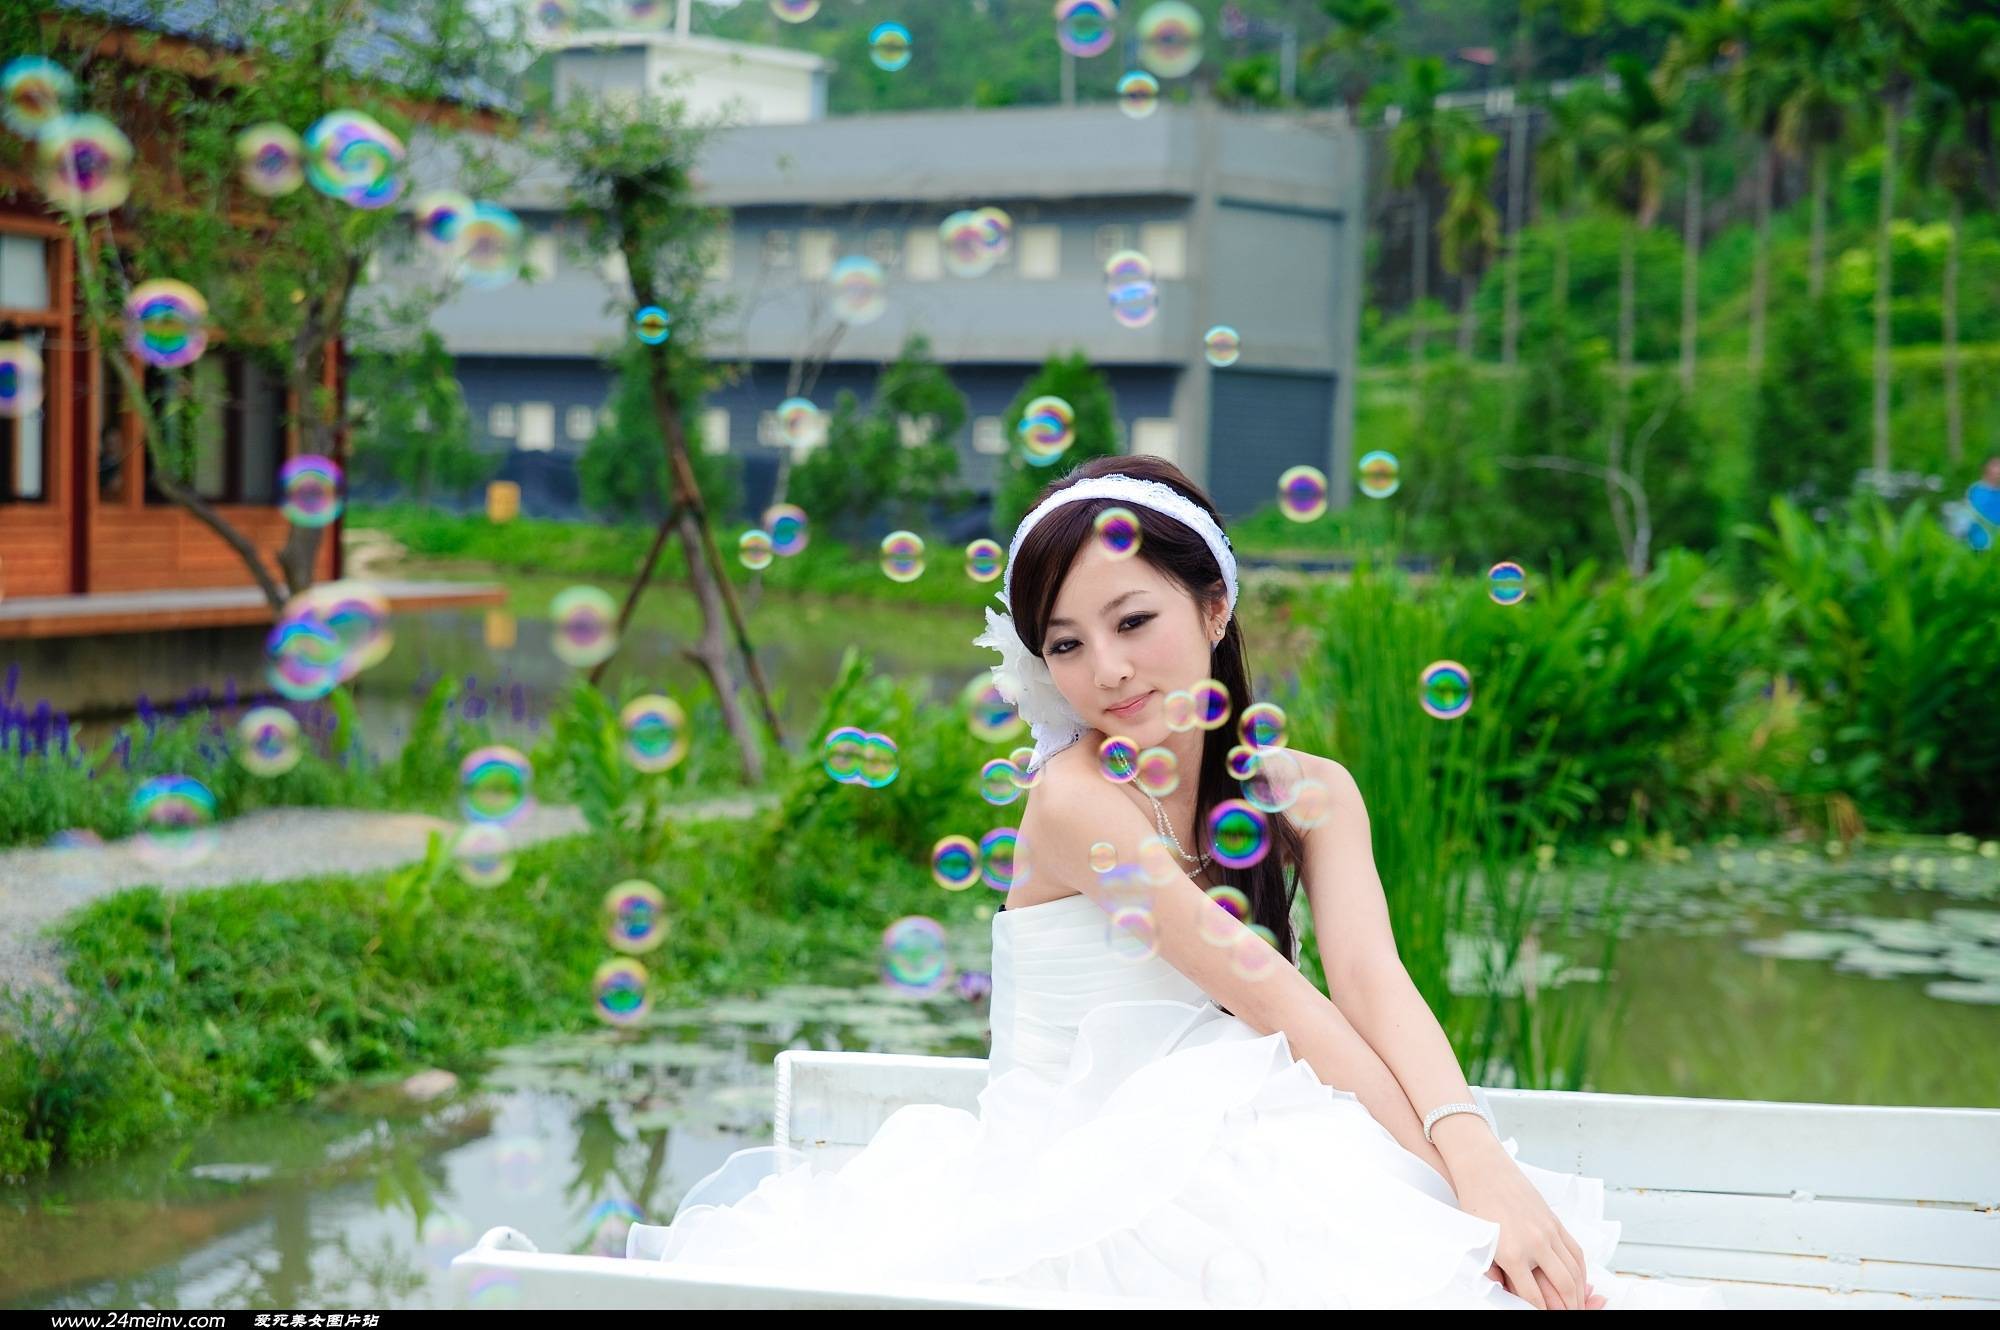 Fruit Sun Moon Lake + paper Church (wedding dress)